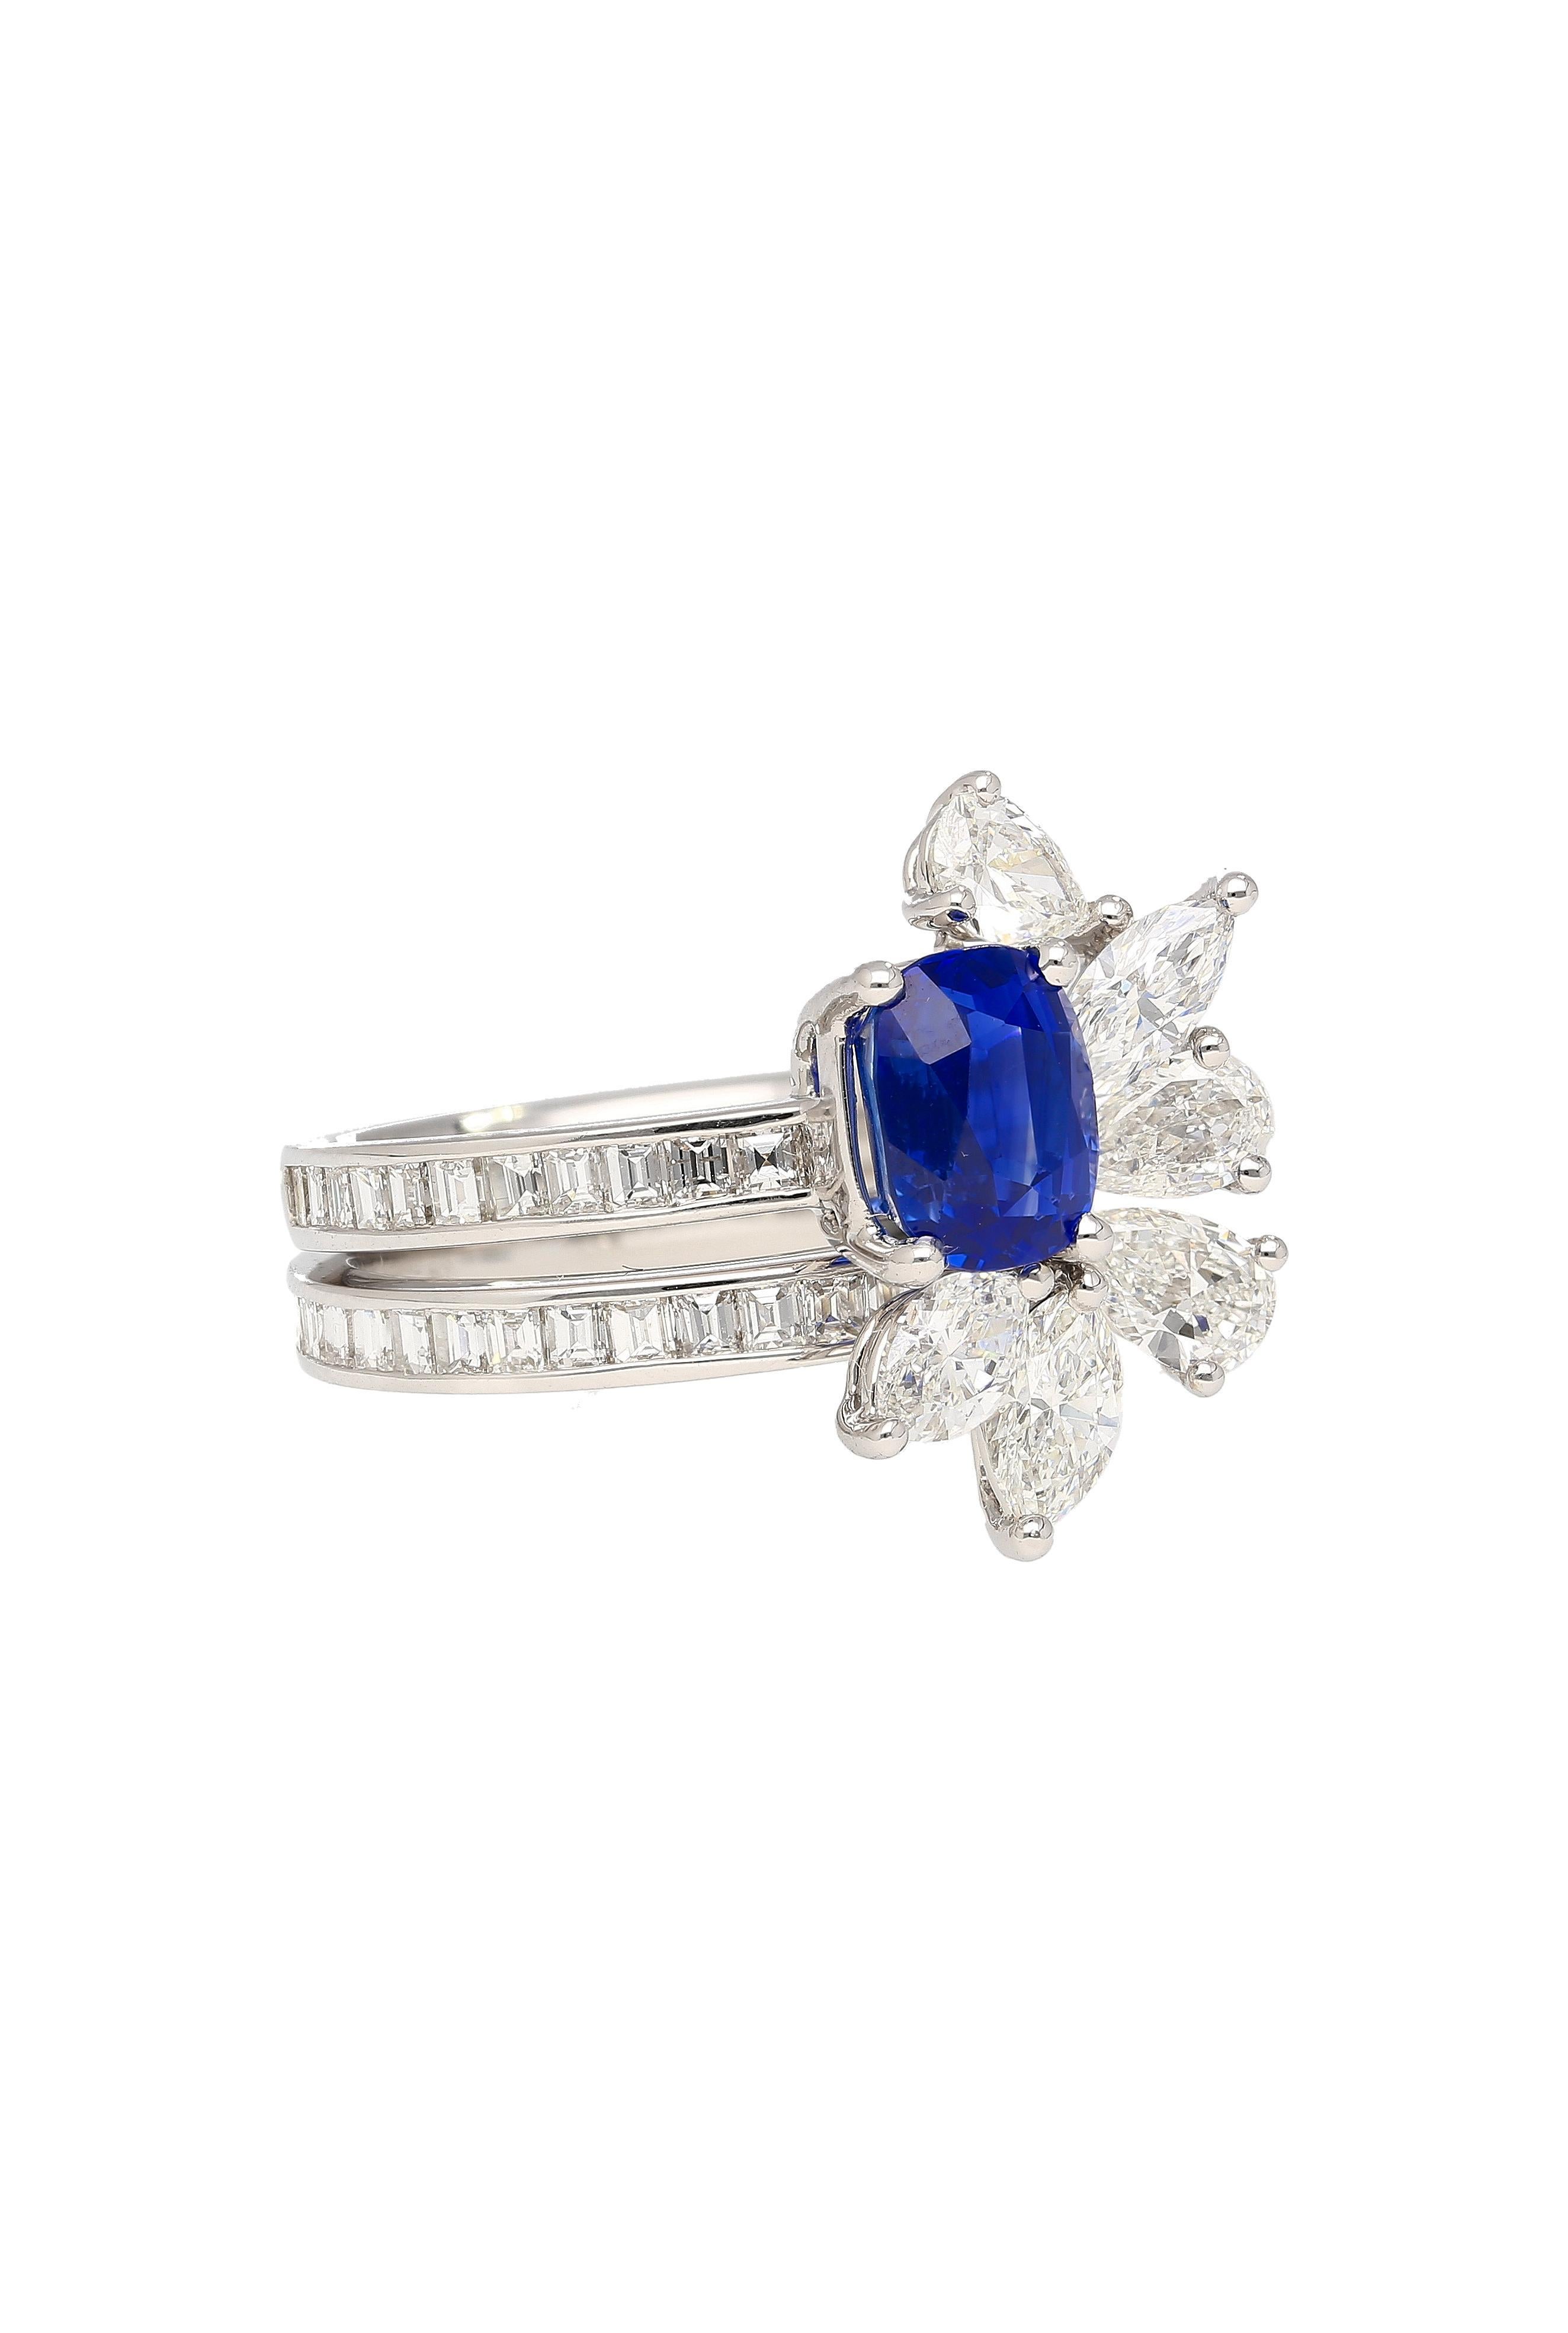 AGL Certified 8 Carat No Heat Kashmir Sapphire, Burma Ruby, & Diamond Stack Ring For Sale 2